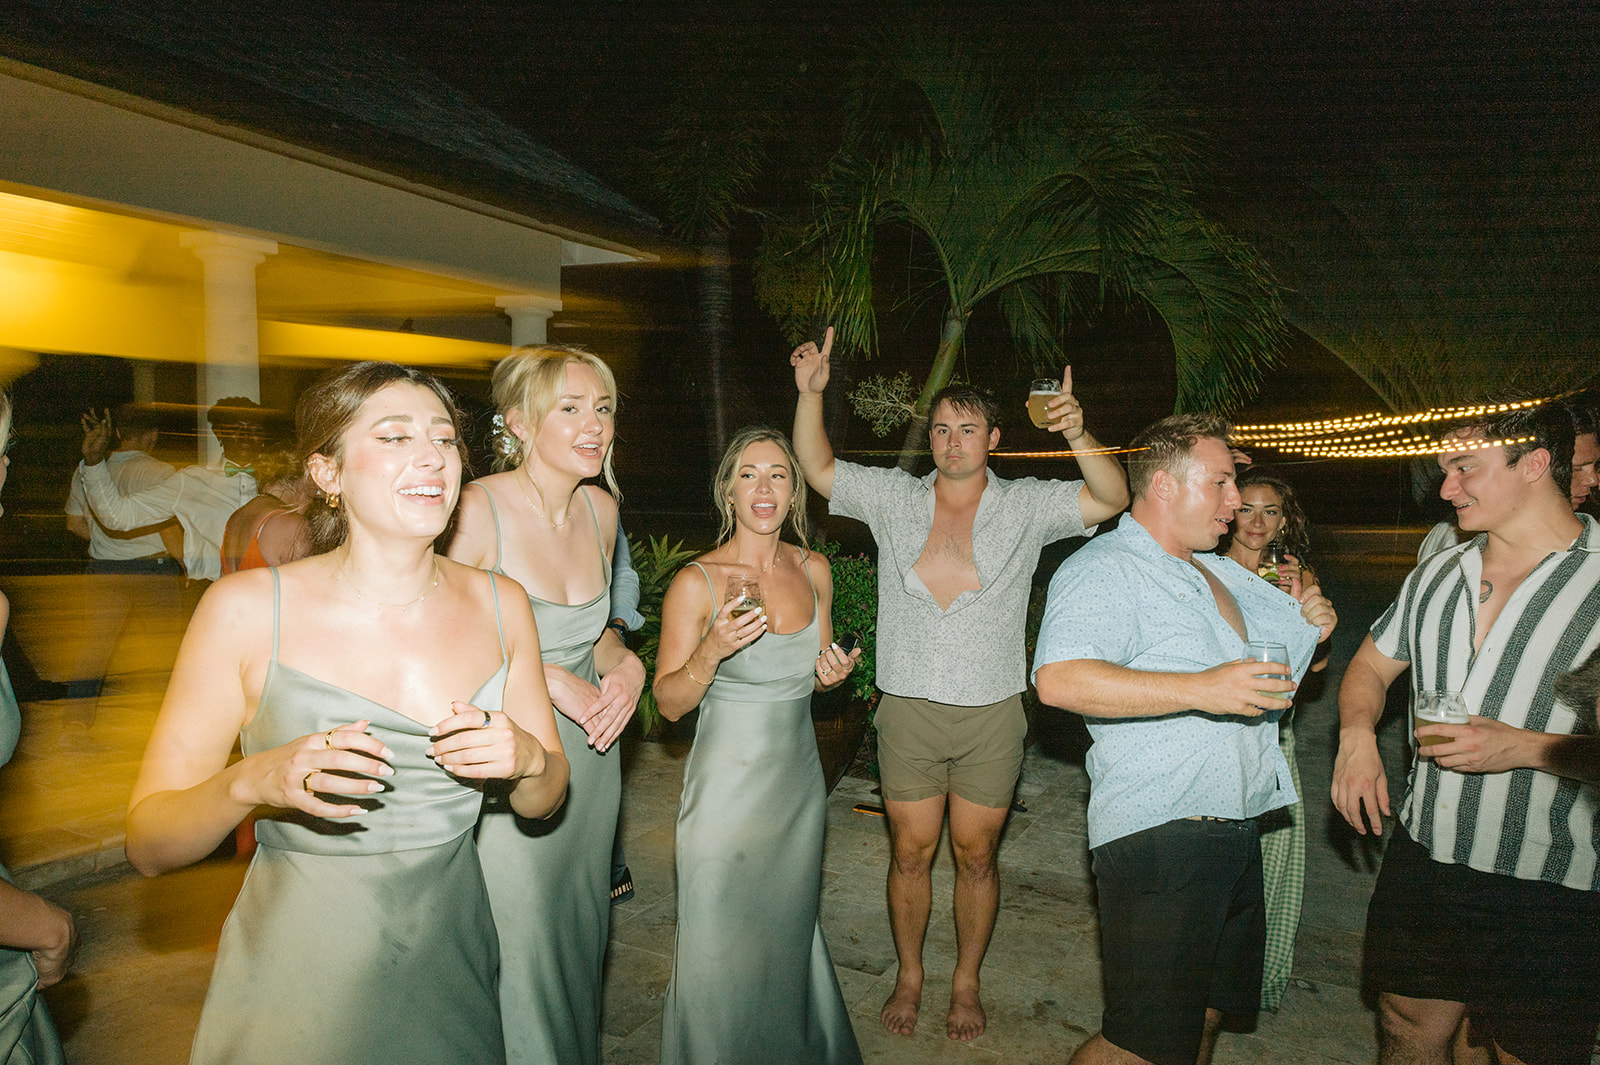 The magic of candid shots at Antigua's wedding receptions
